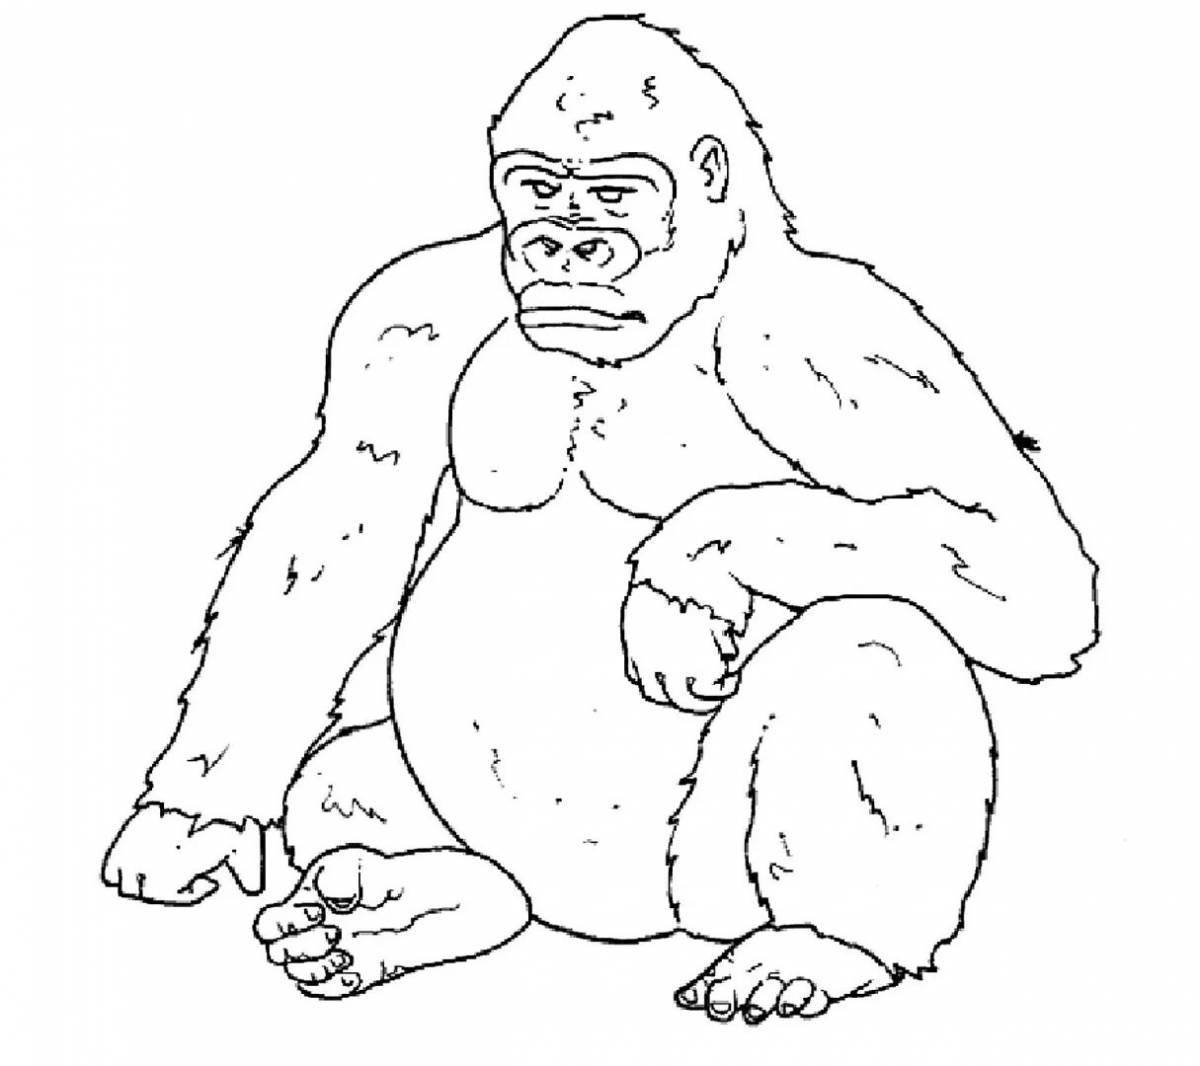 Crazy gorilla coloring book for kids